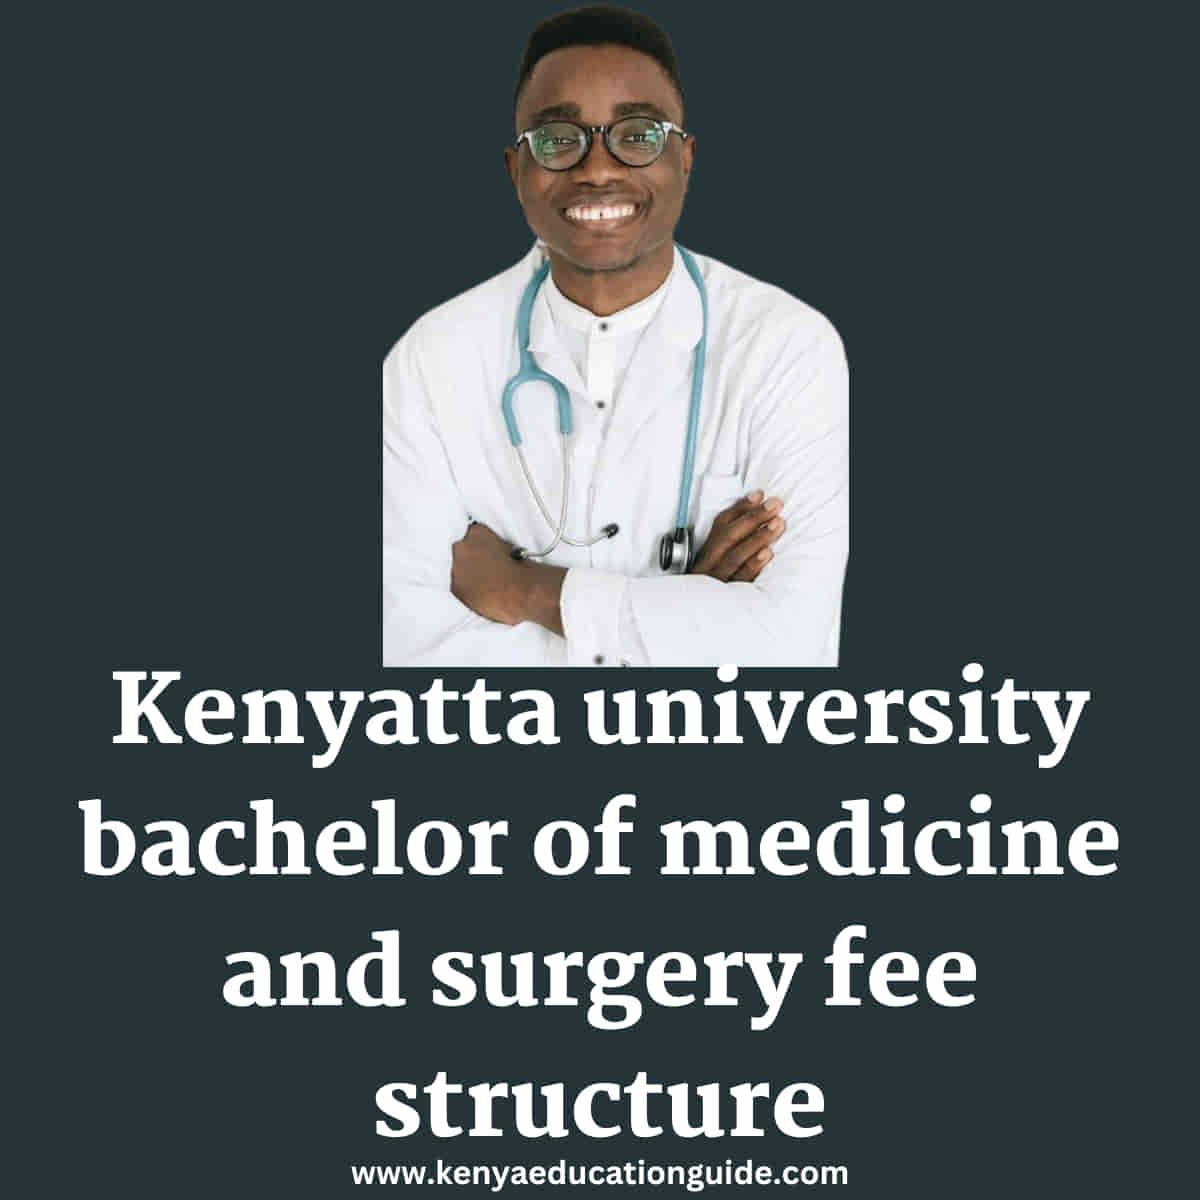 Kenyatta university bachelor of medicine and surgery fee structure